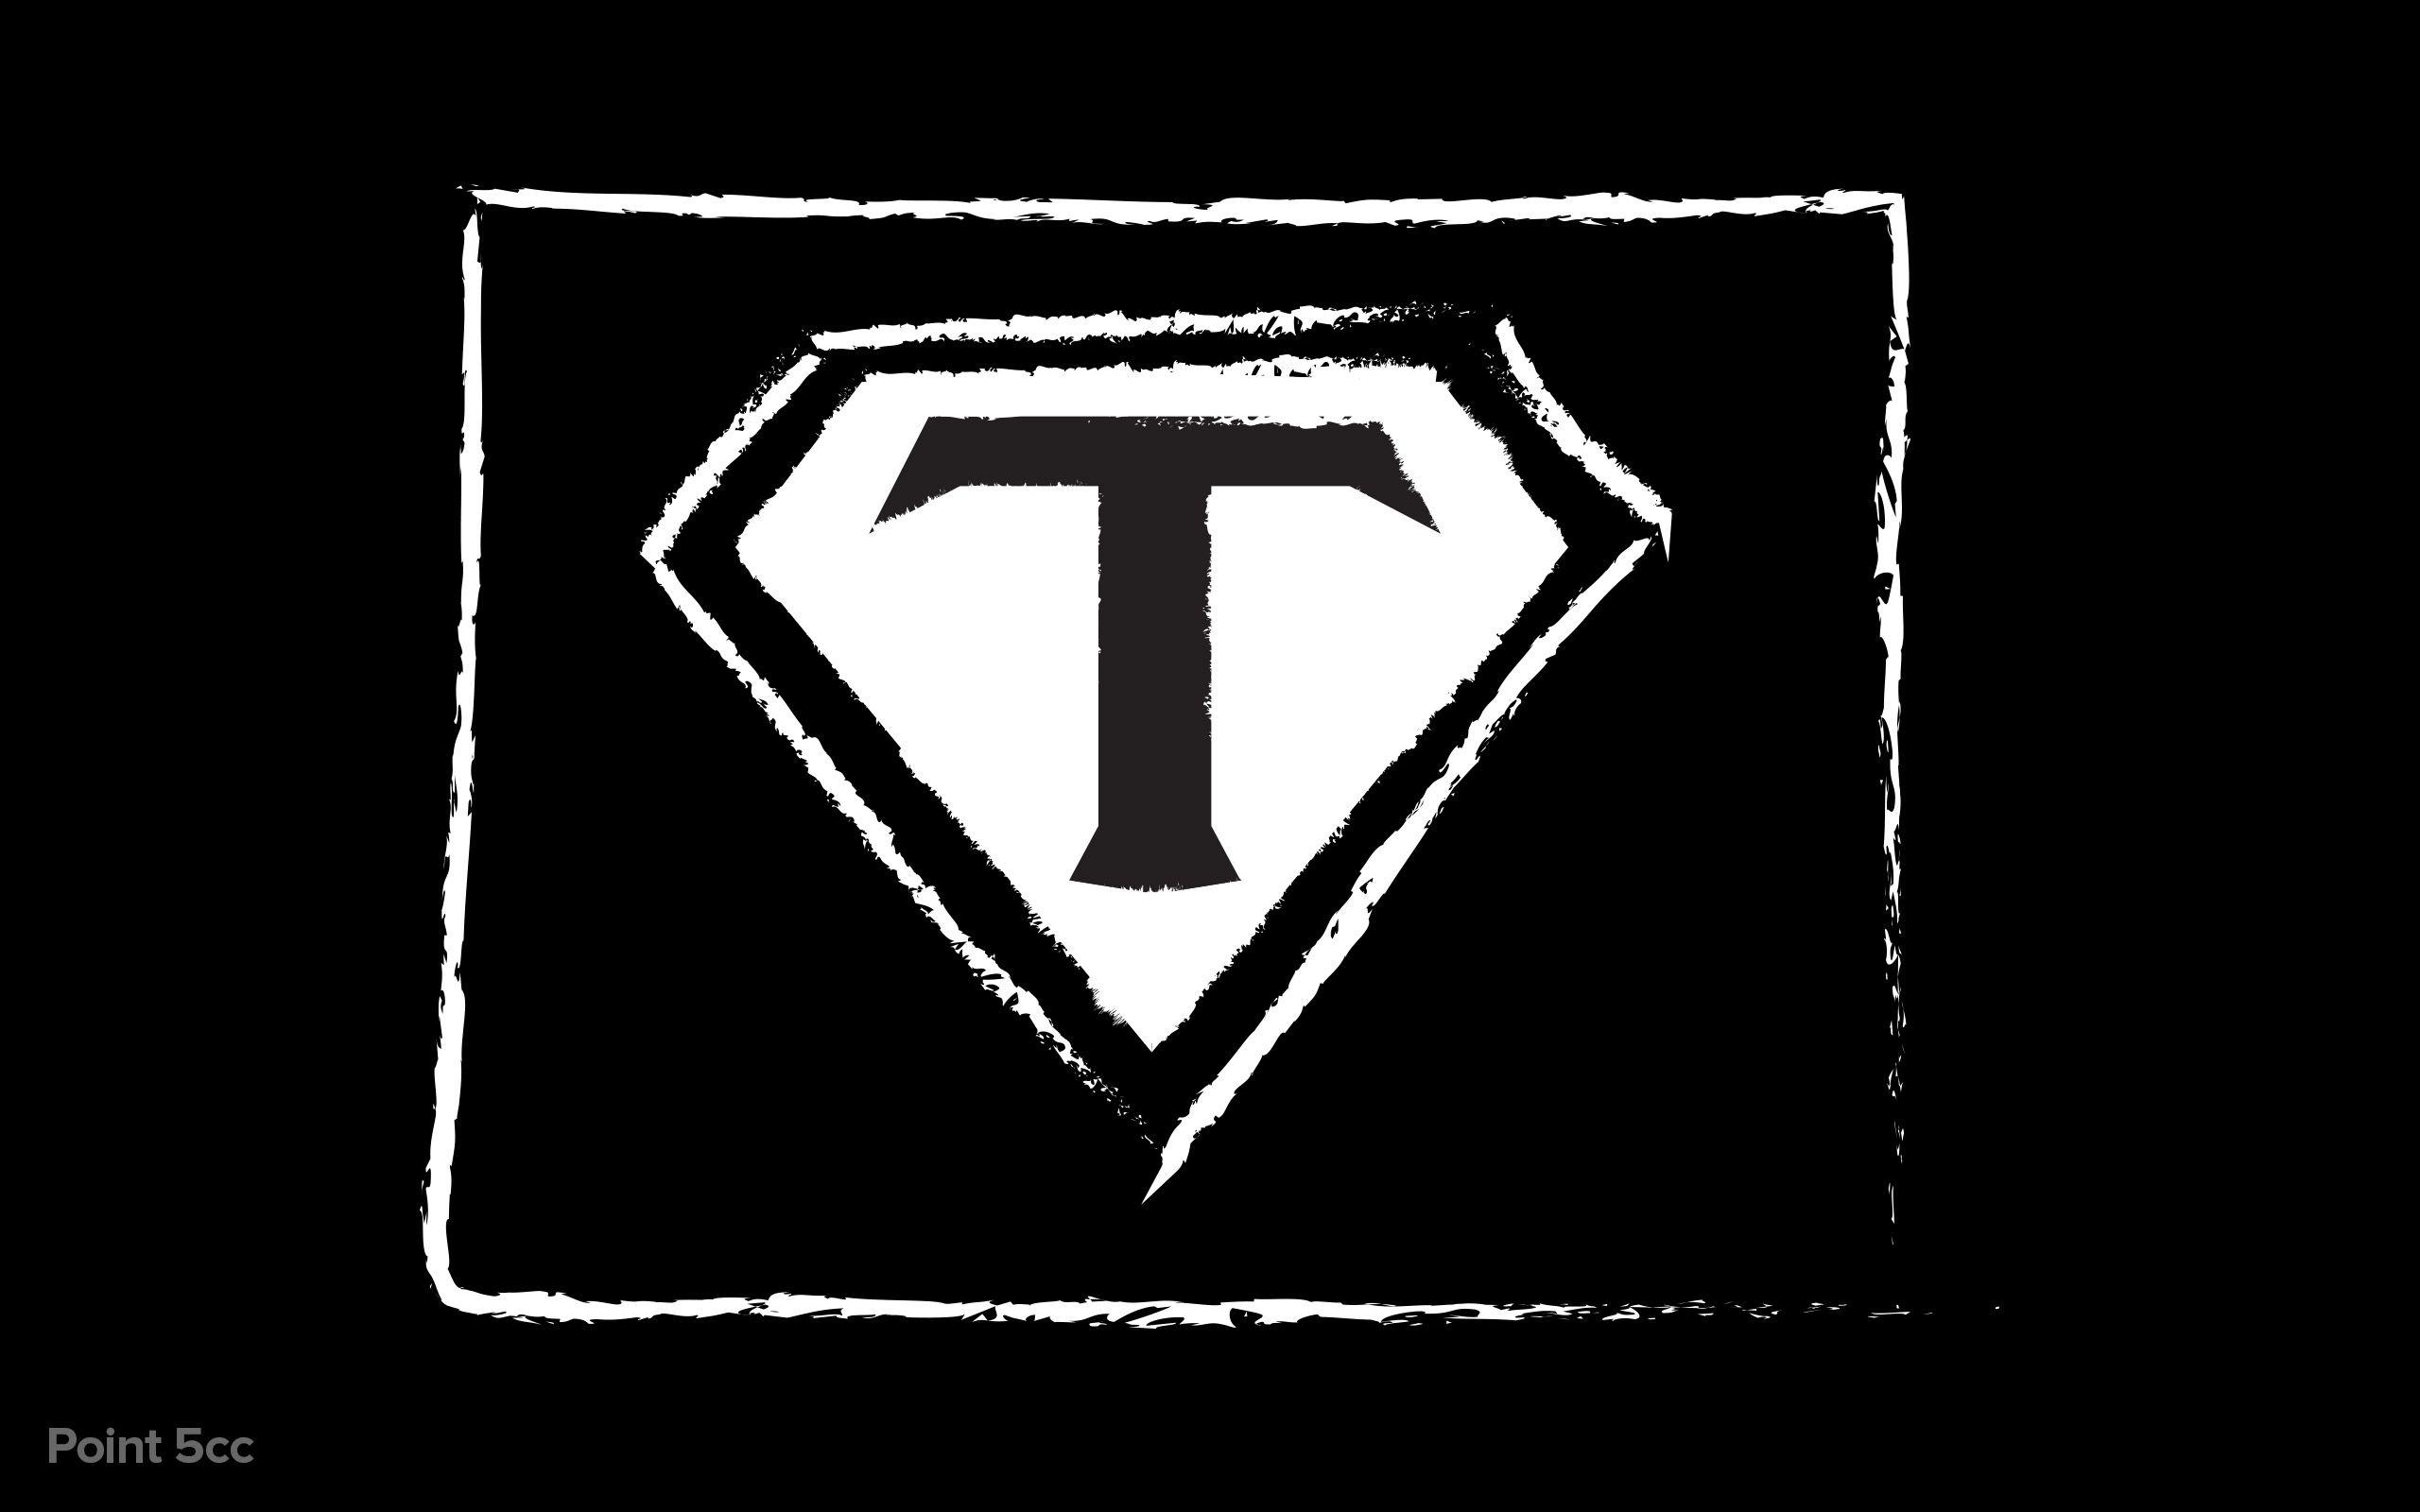 Super T Logo - Free Point 5cc Wallpaper Download